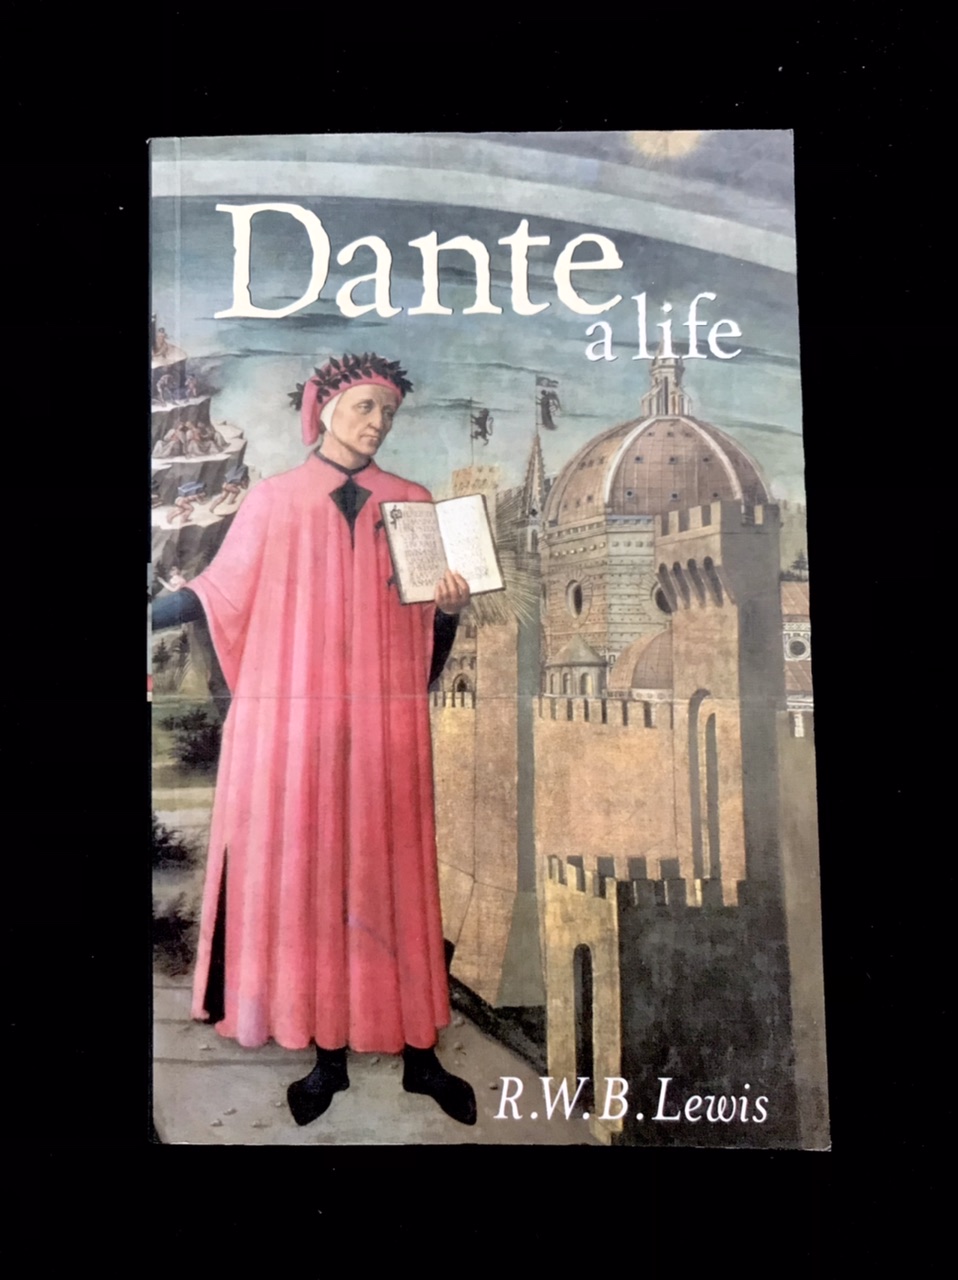 Dante: A Life by R. W. B. Lewis